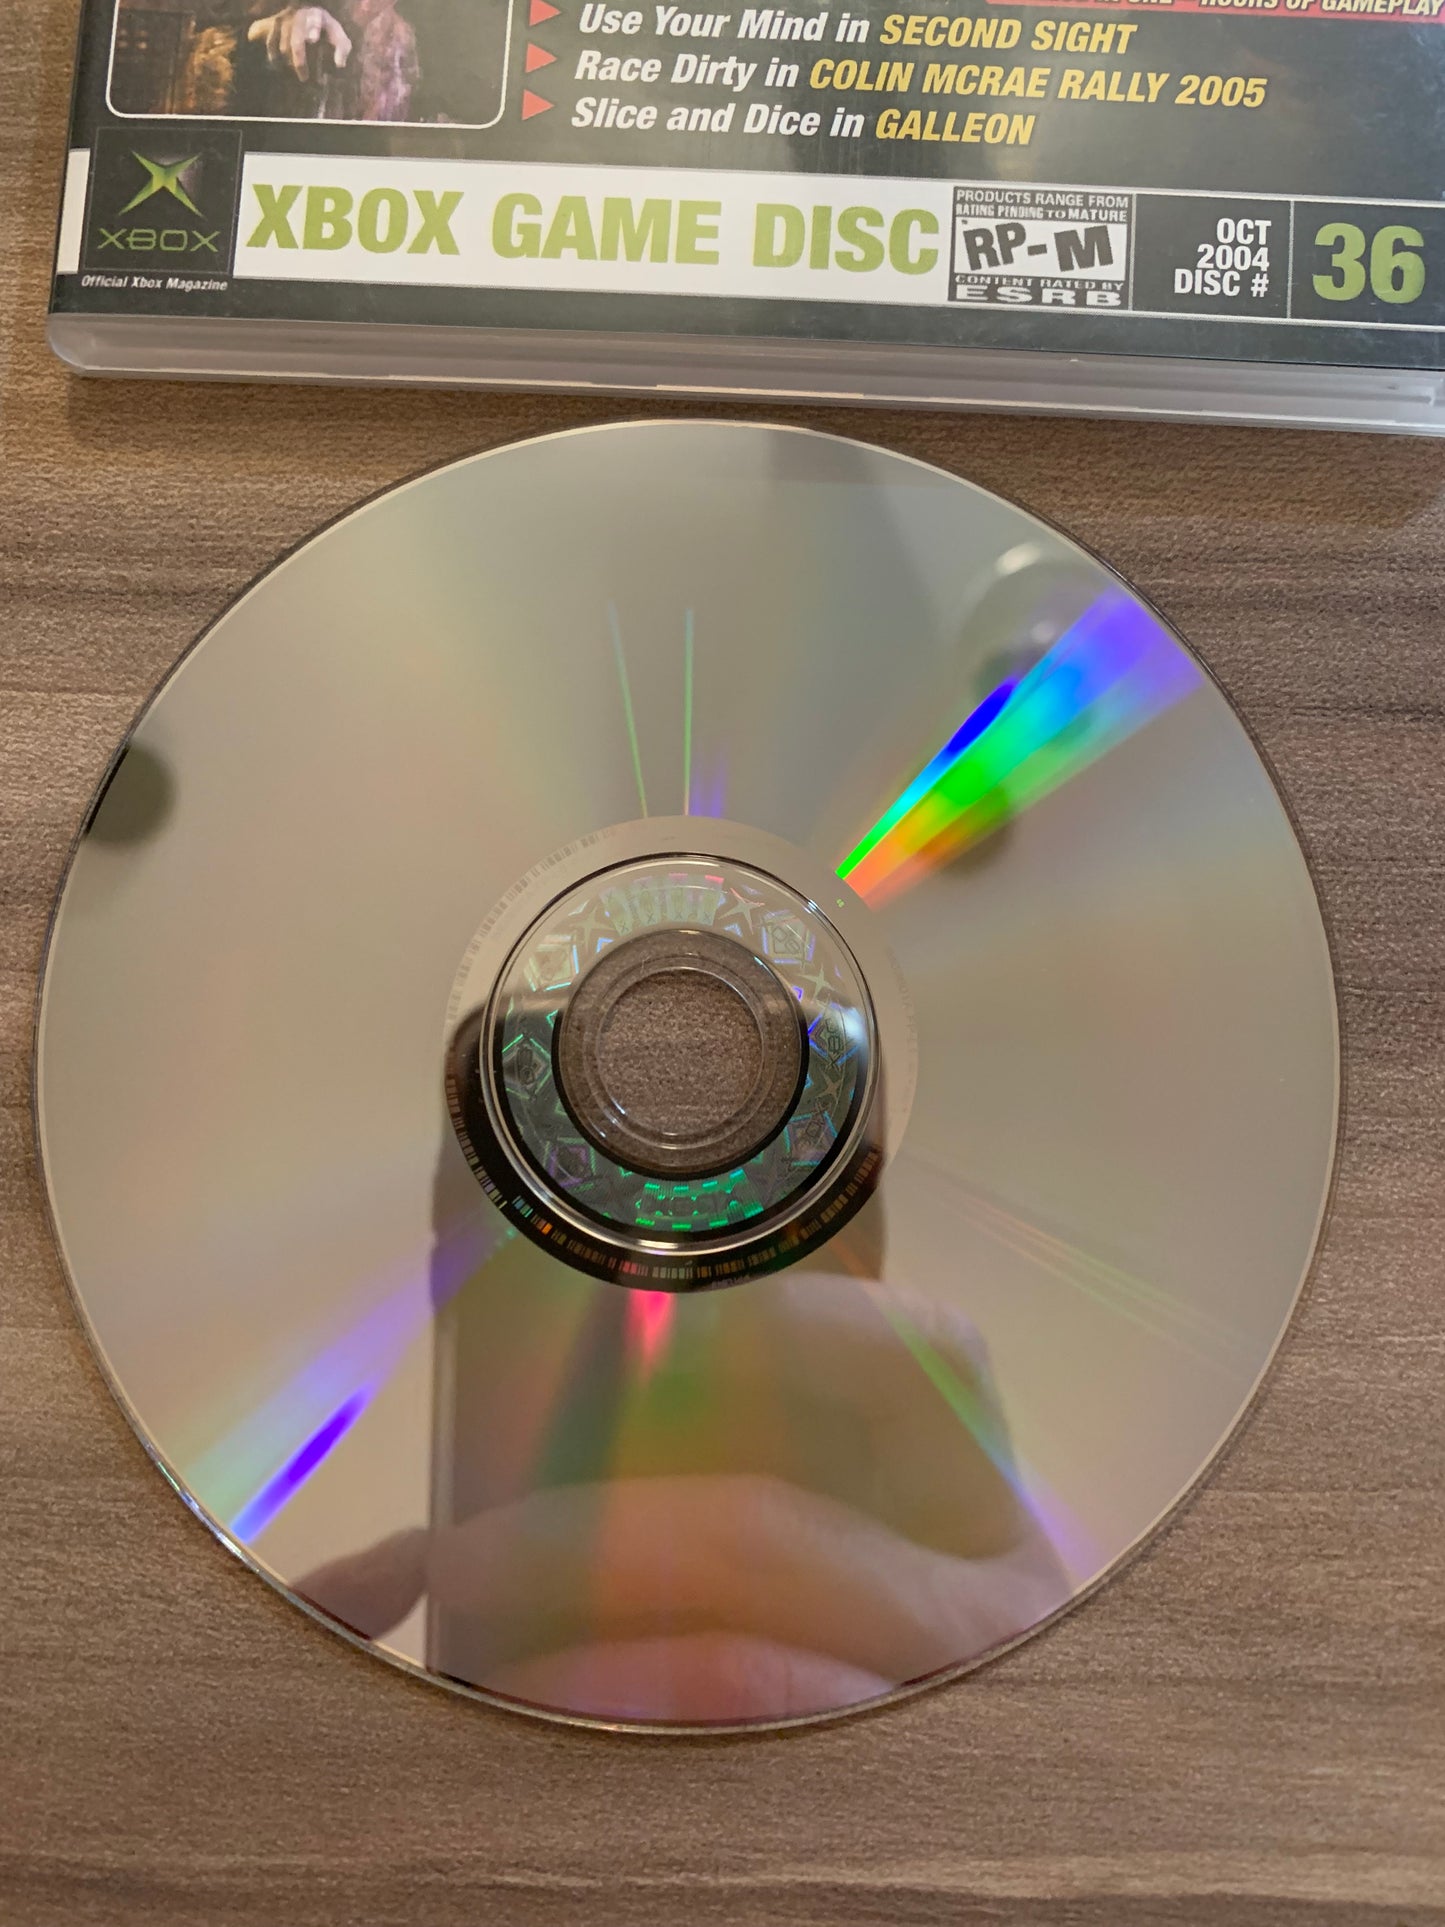 MiCROSOFT XBOX ORiGiNAL | OFFiCiAL XBOX MAGAZiNE DEMO GAME DiSC CD #36 OCT 2004